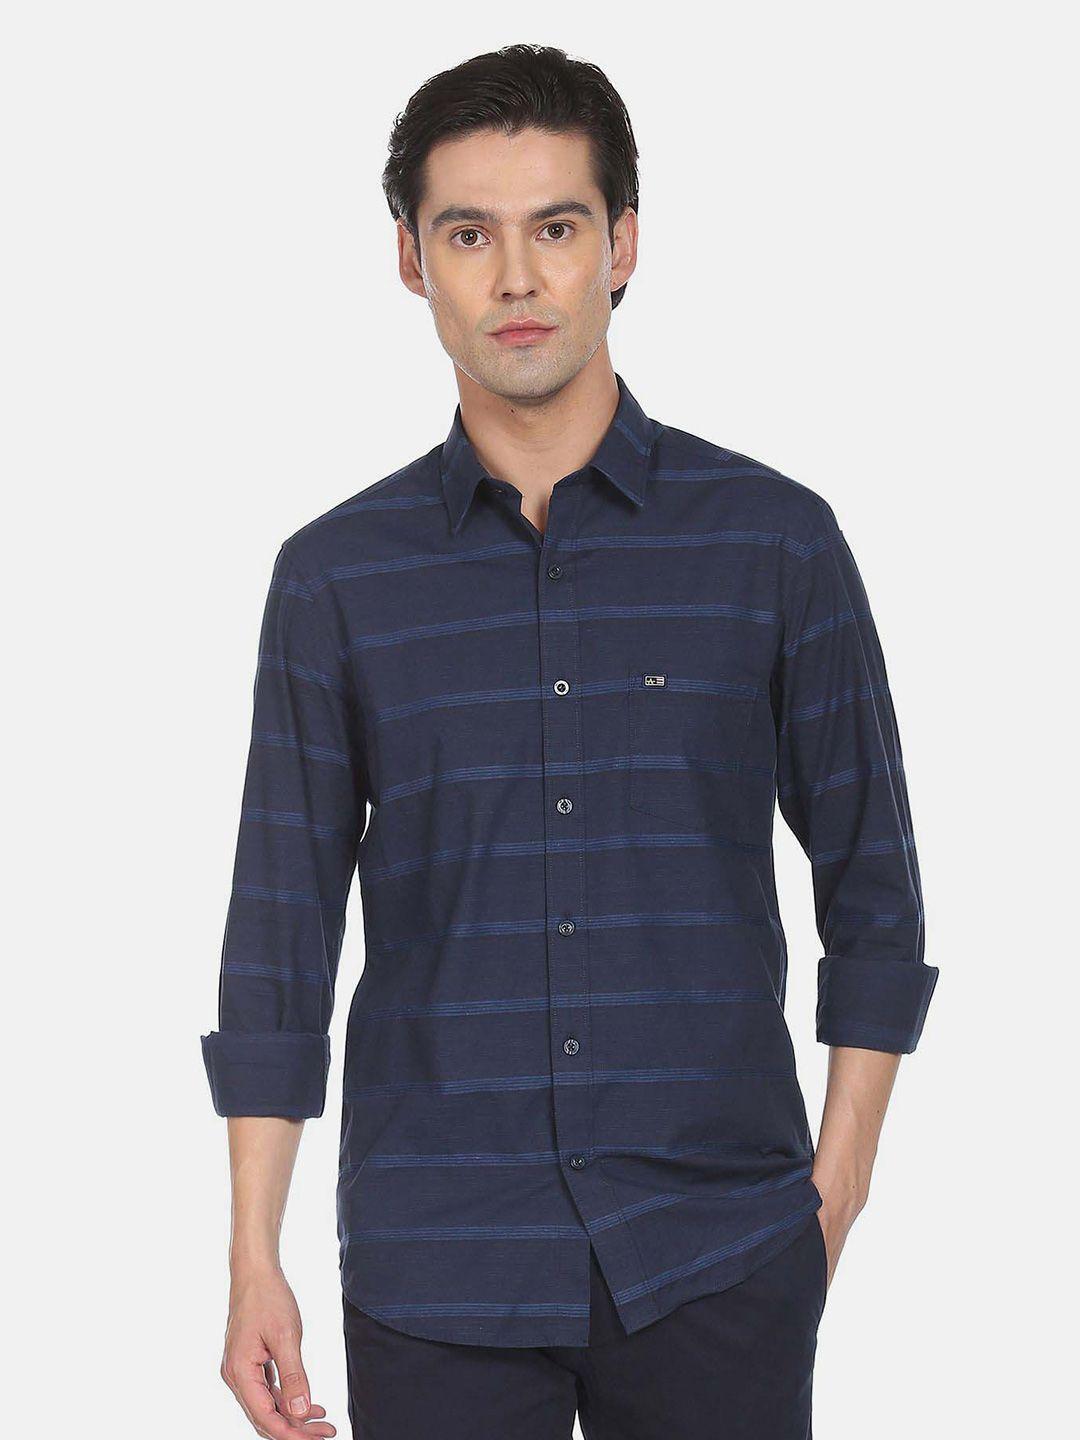 arrow-sport-men-blue-slim-fit-horizontal-striped-cotton-casual-shirt